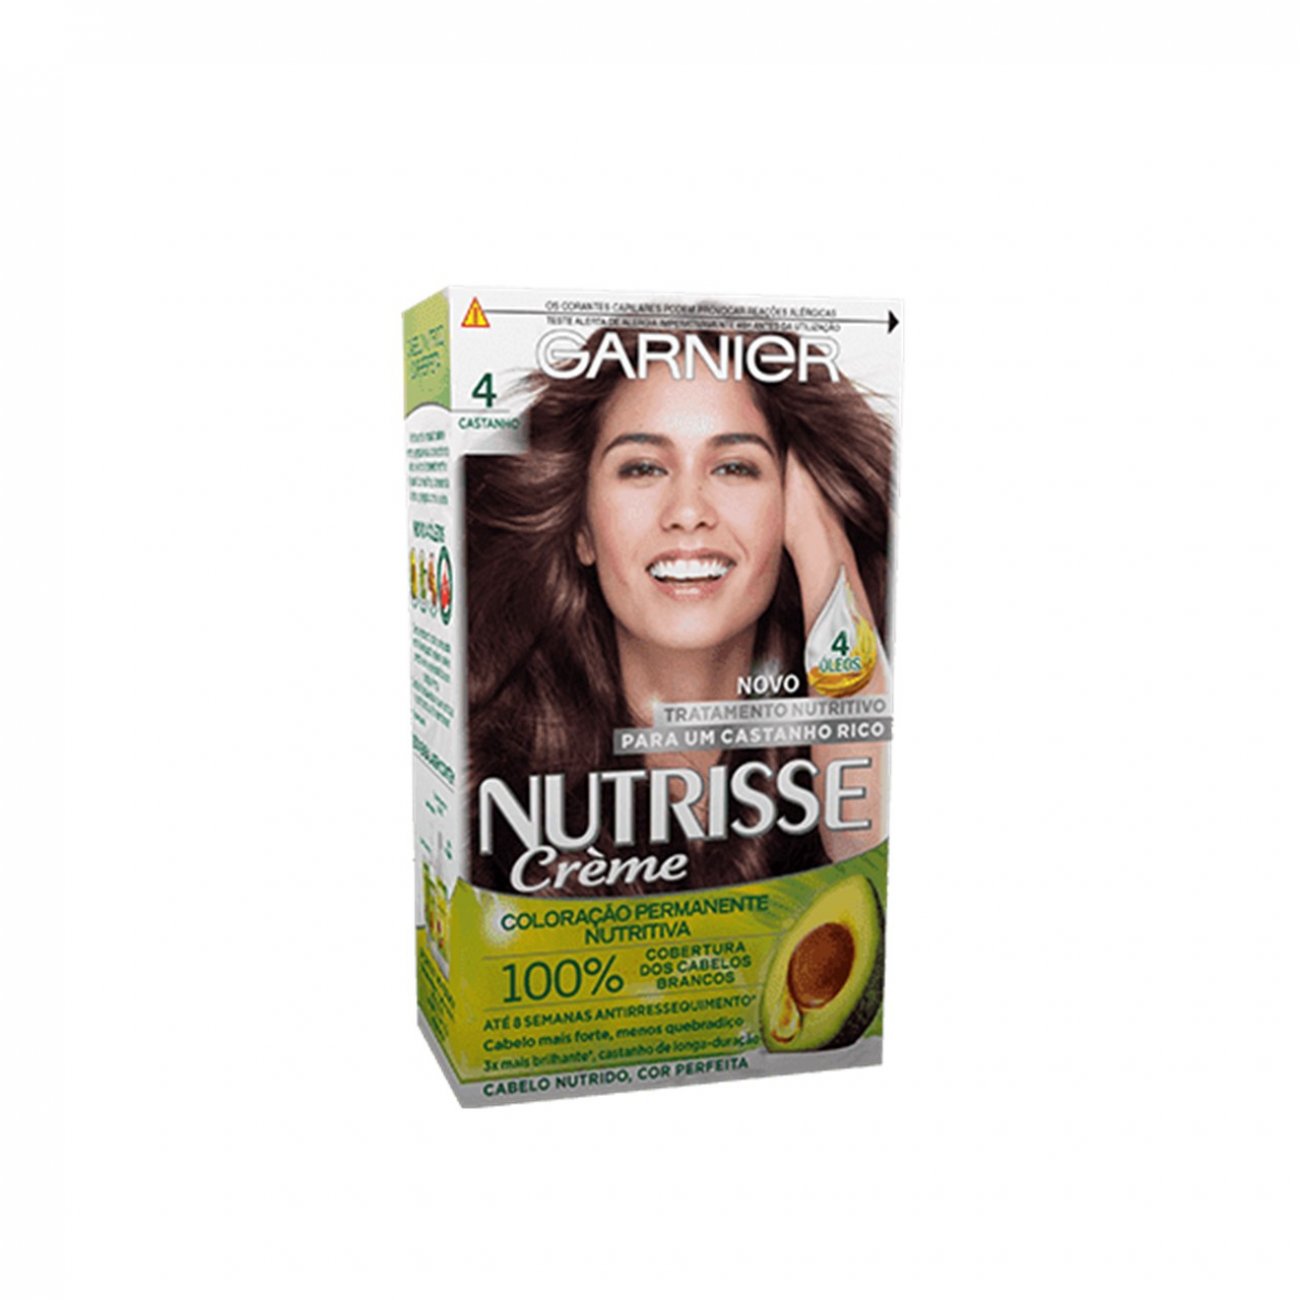 Buy Garnier Nutrisse Crème 4 Dark Brown Permanent Hair Dye · Turkey